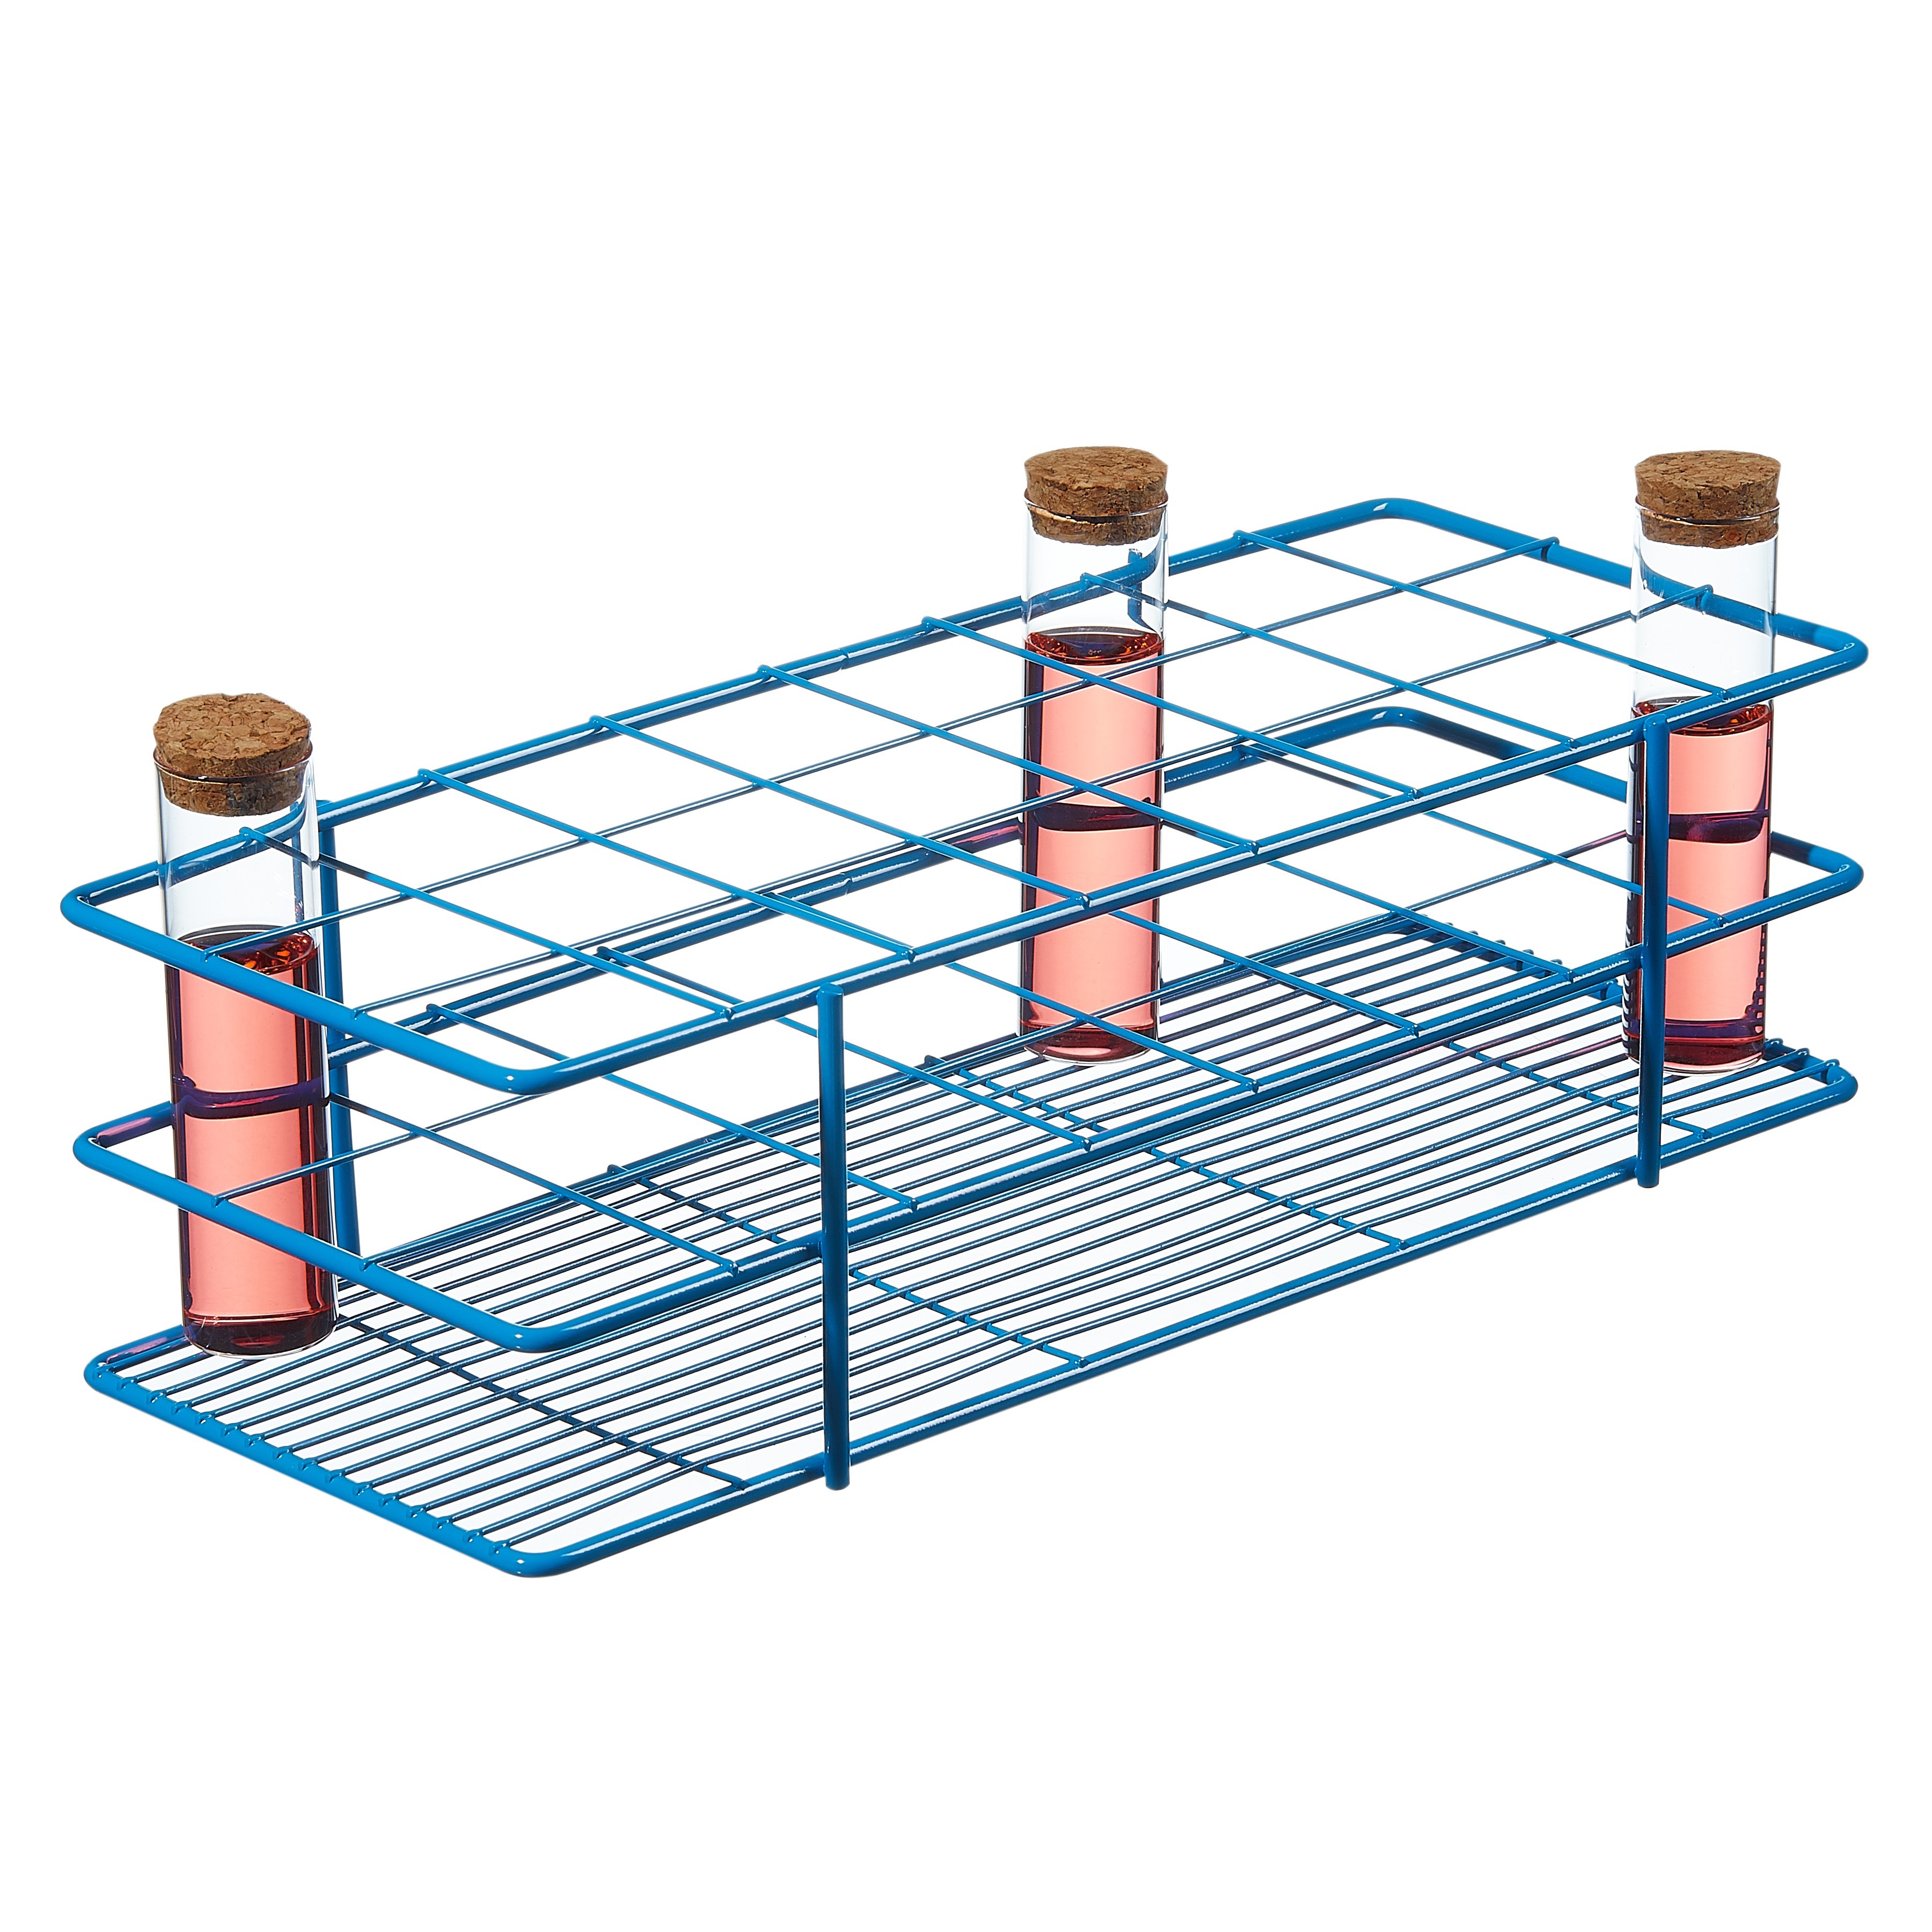 Bel-Art PoxyGrid Labware Drain Stand Three rows:Racks, Quantity